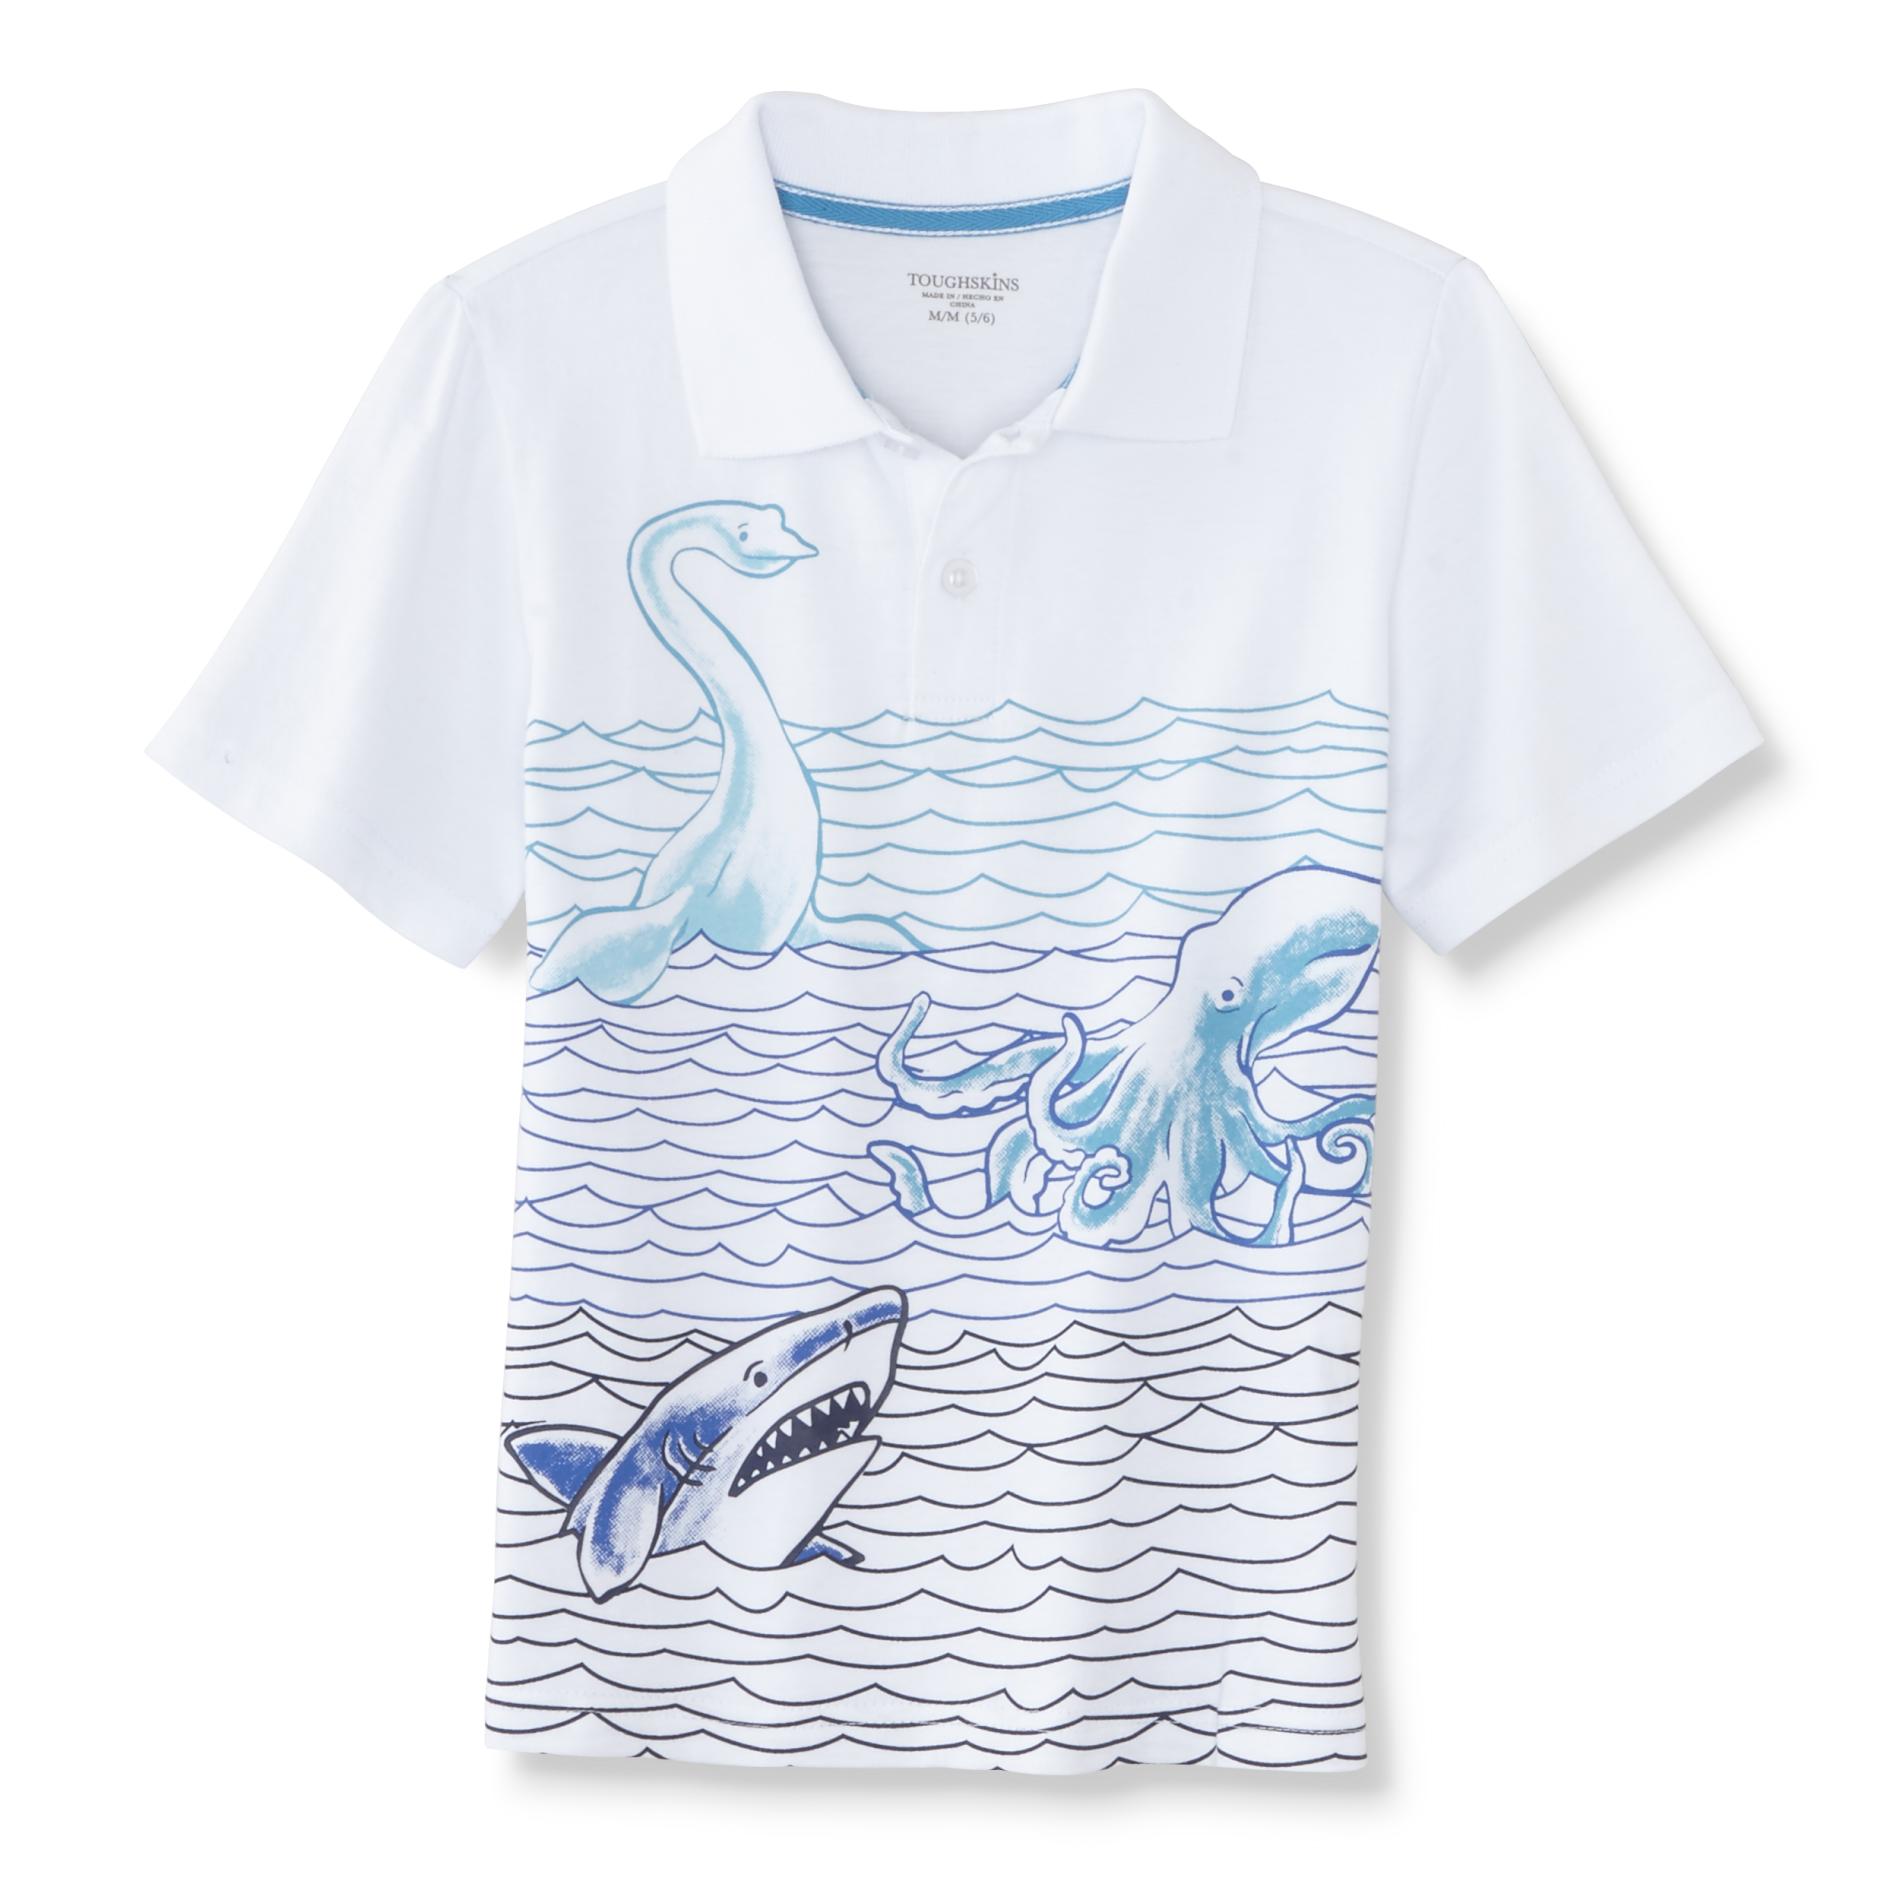 Toughskins Infant & Toddler Boy's Graphic Polo Shirt - Ocean Creatures